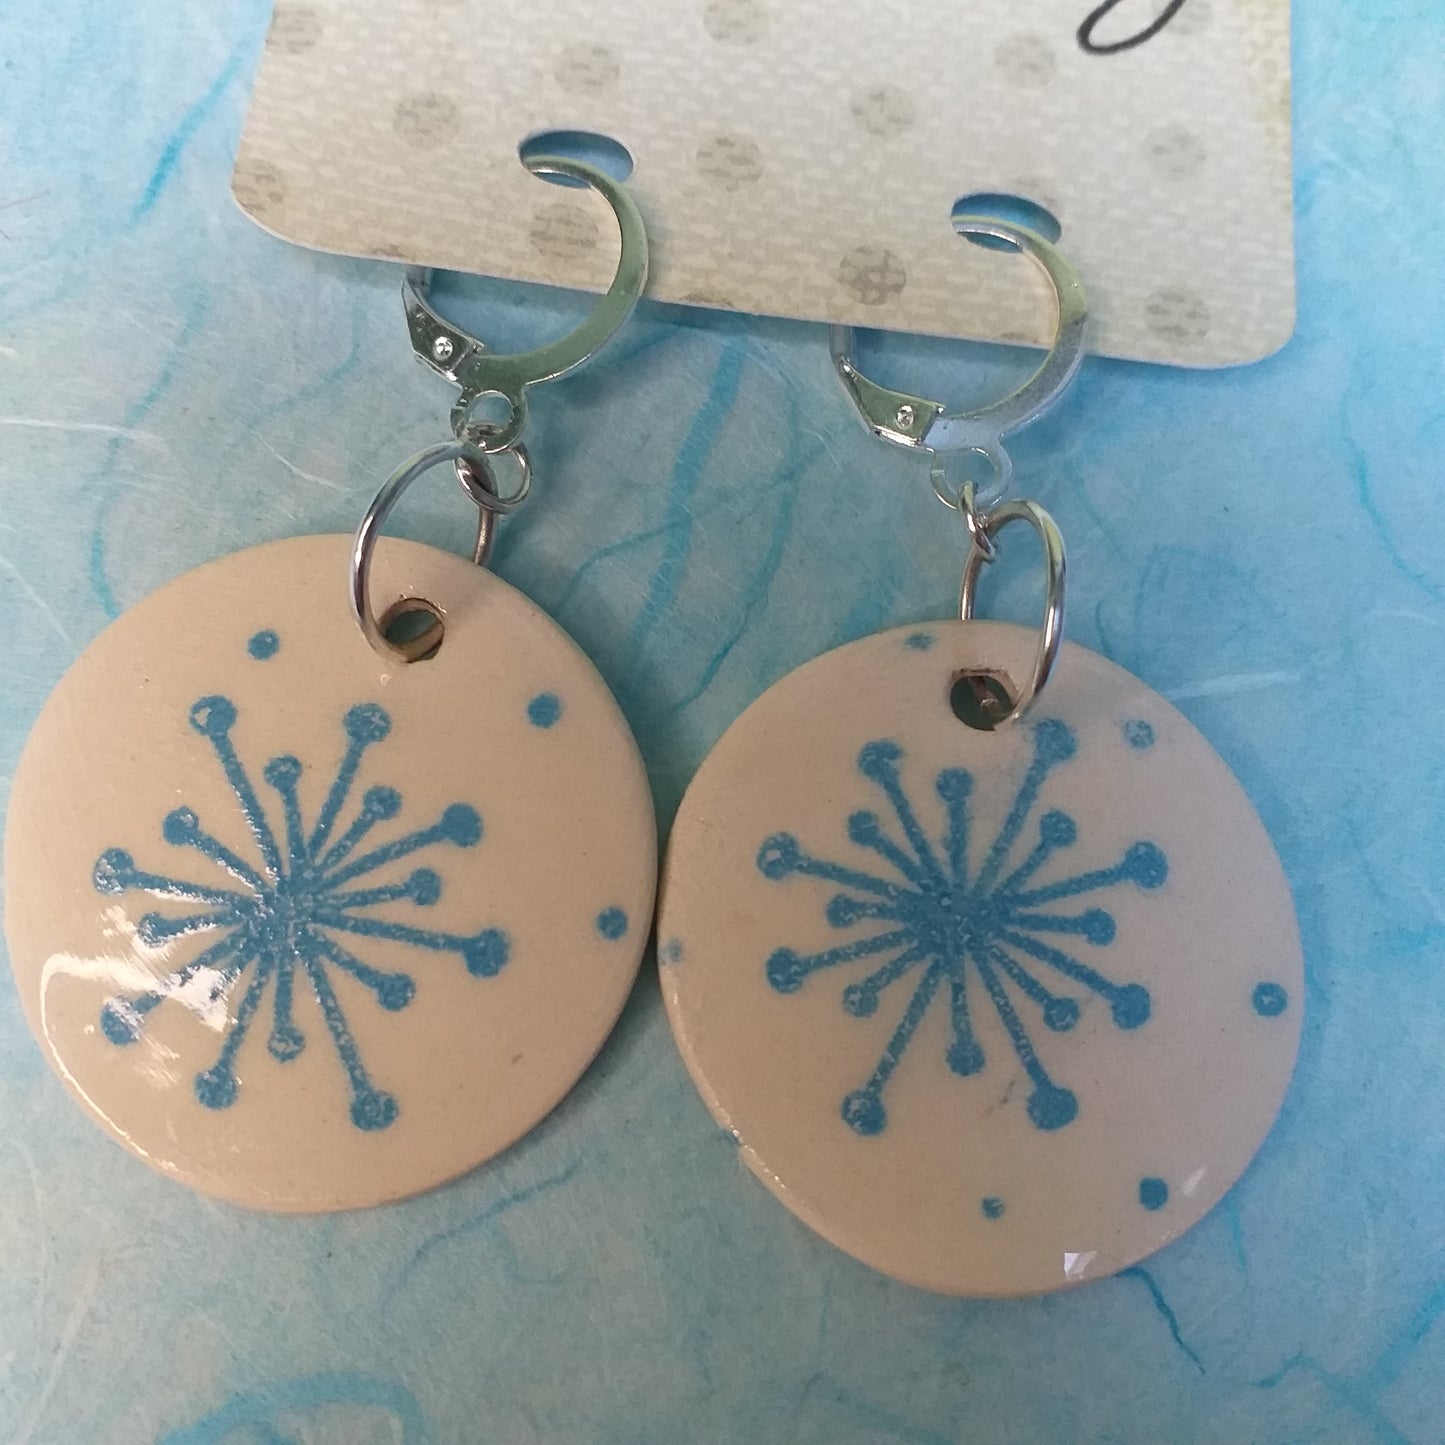 Festive ceramic bead earrings!